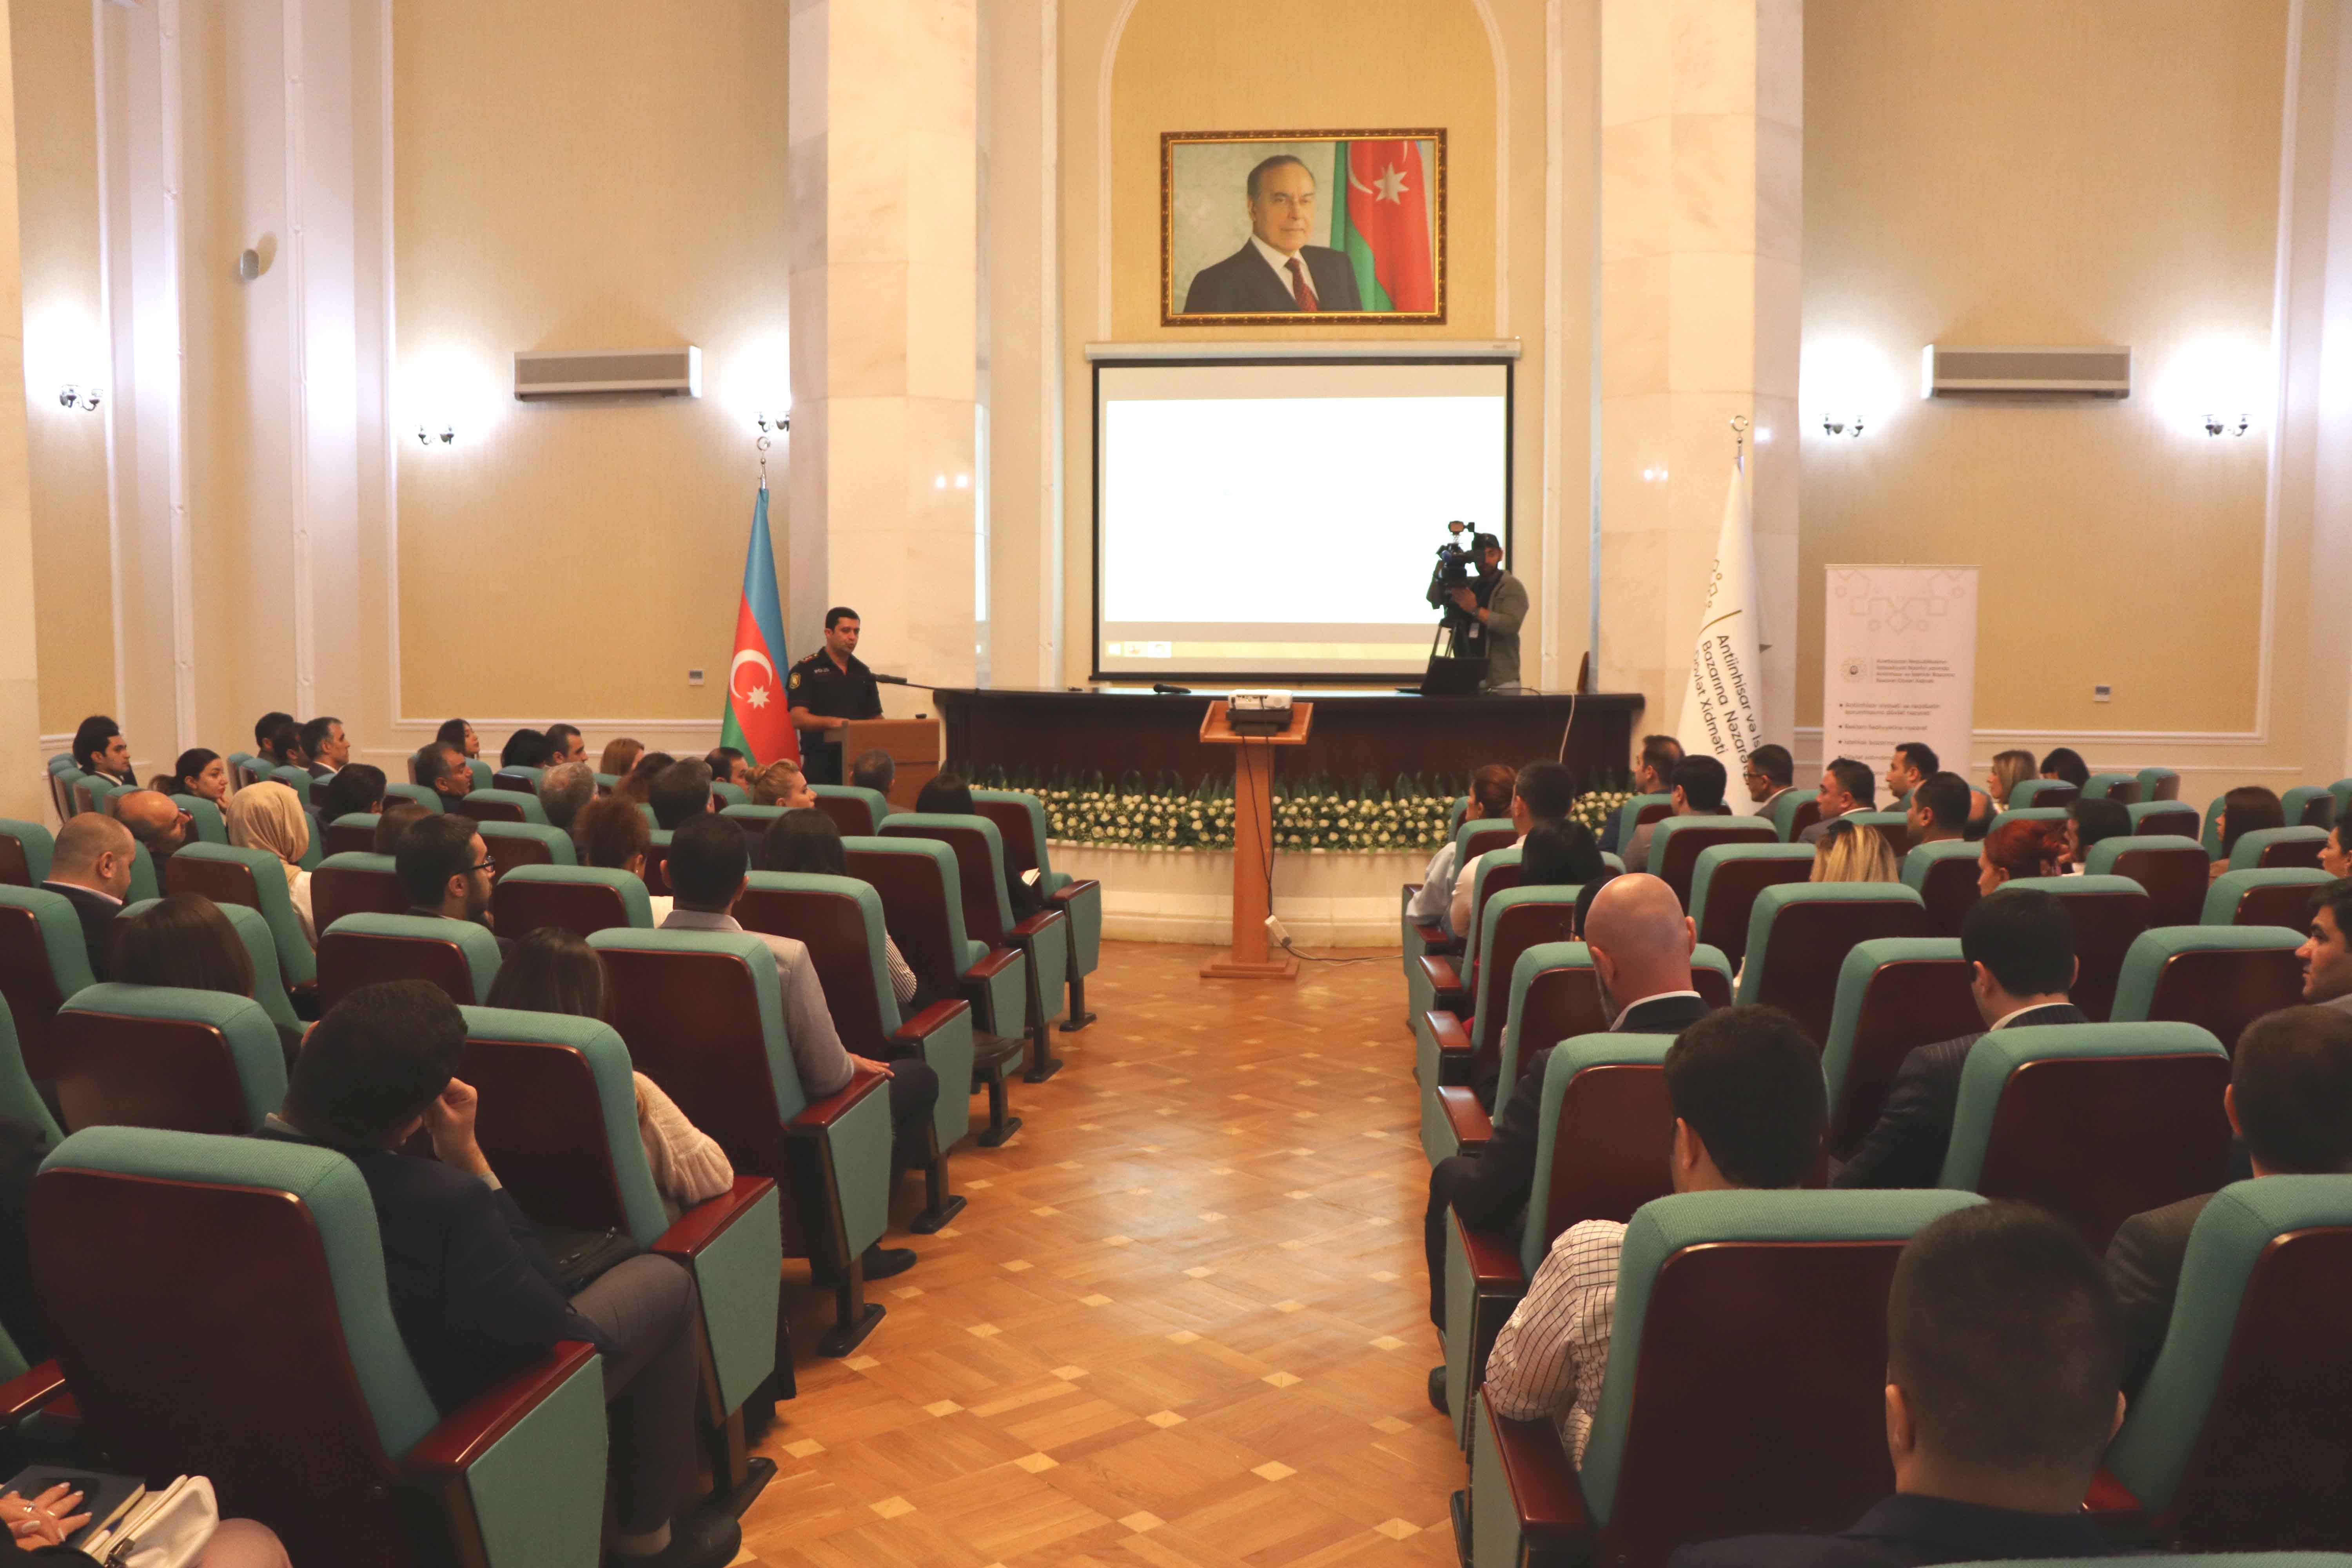 A seminar on advertisement legislation was held